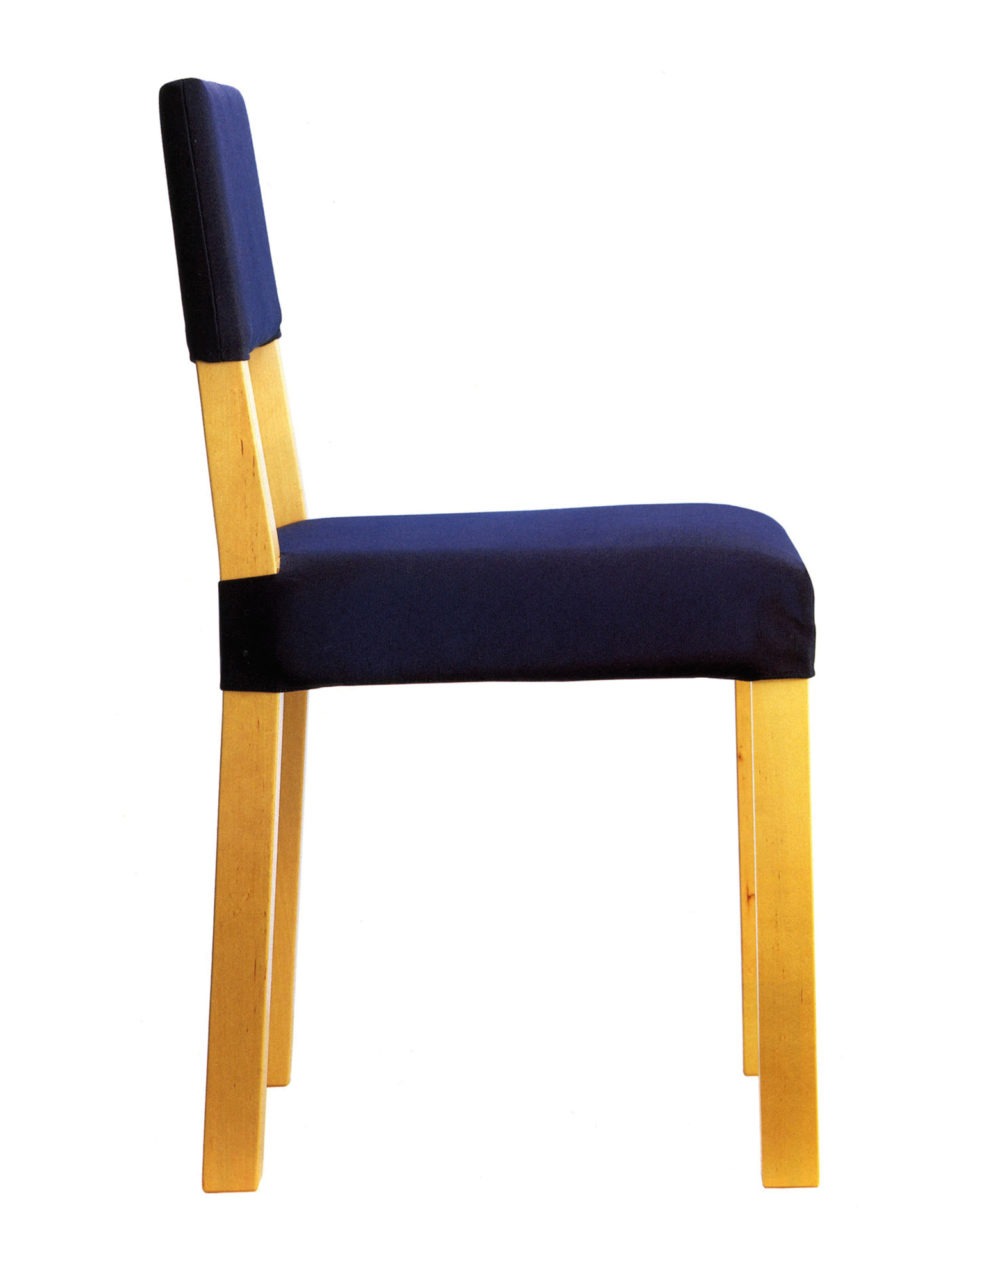 IKEA PS chair 1995.